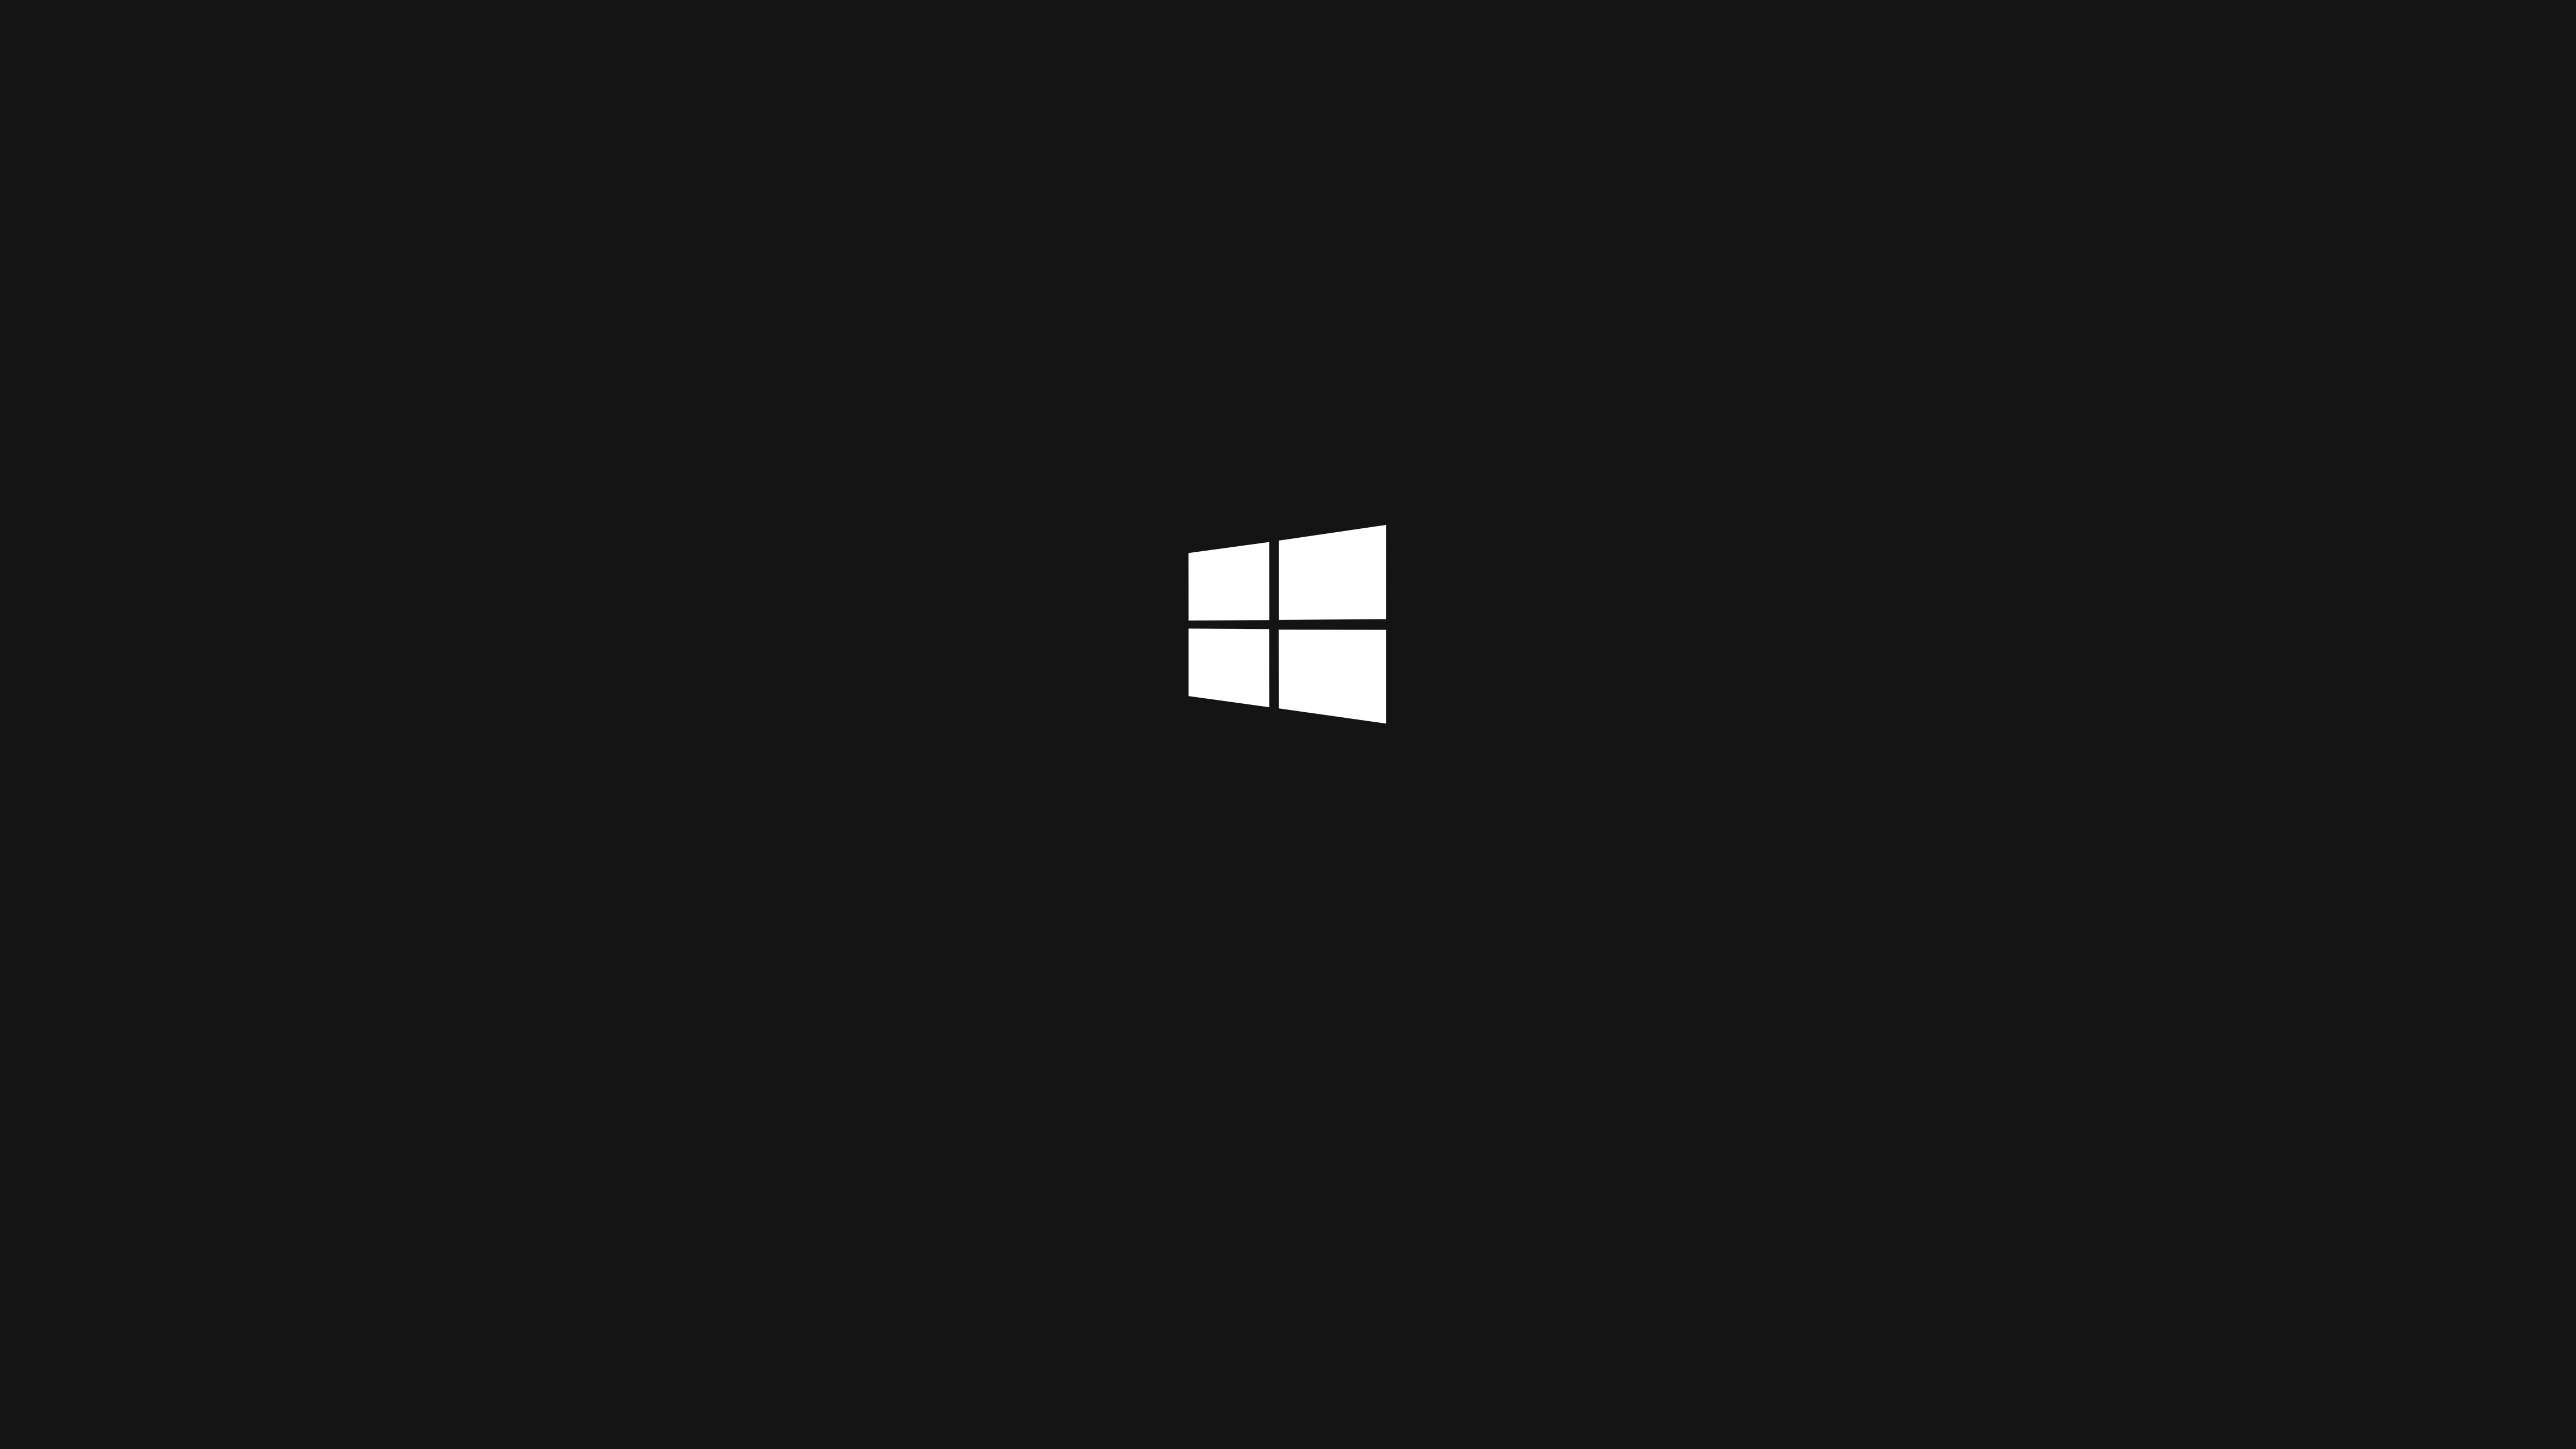 General 4608x2592 Windows 10 minimalism logo spies operating system simple background digital art